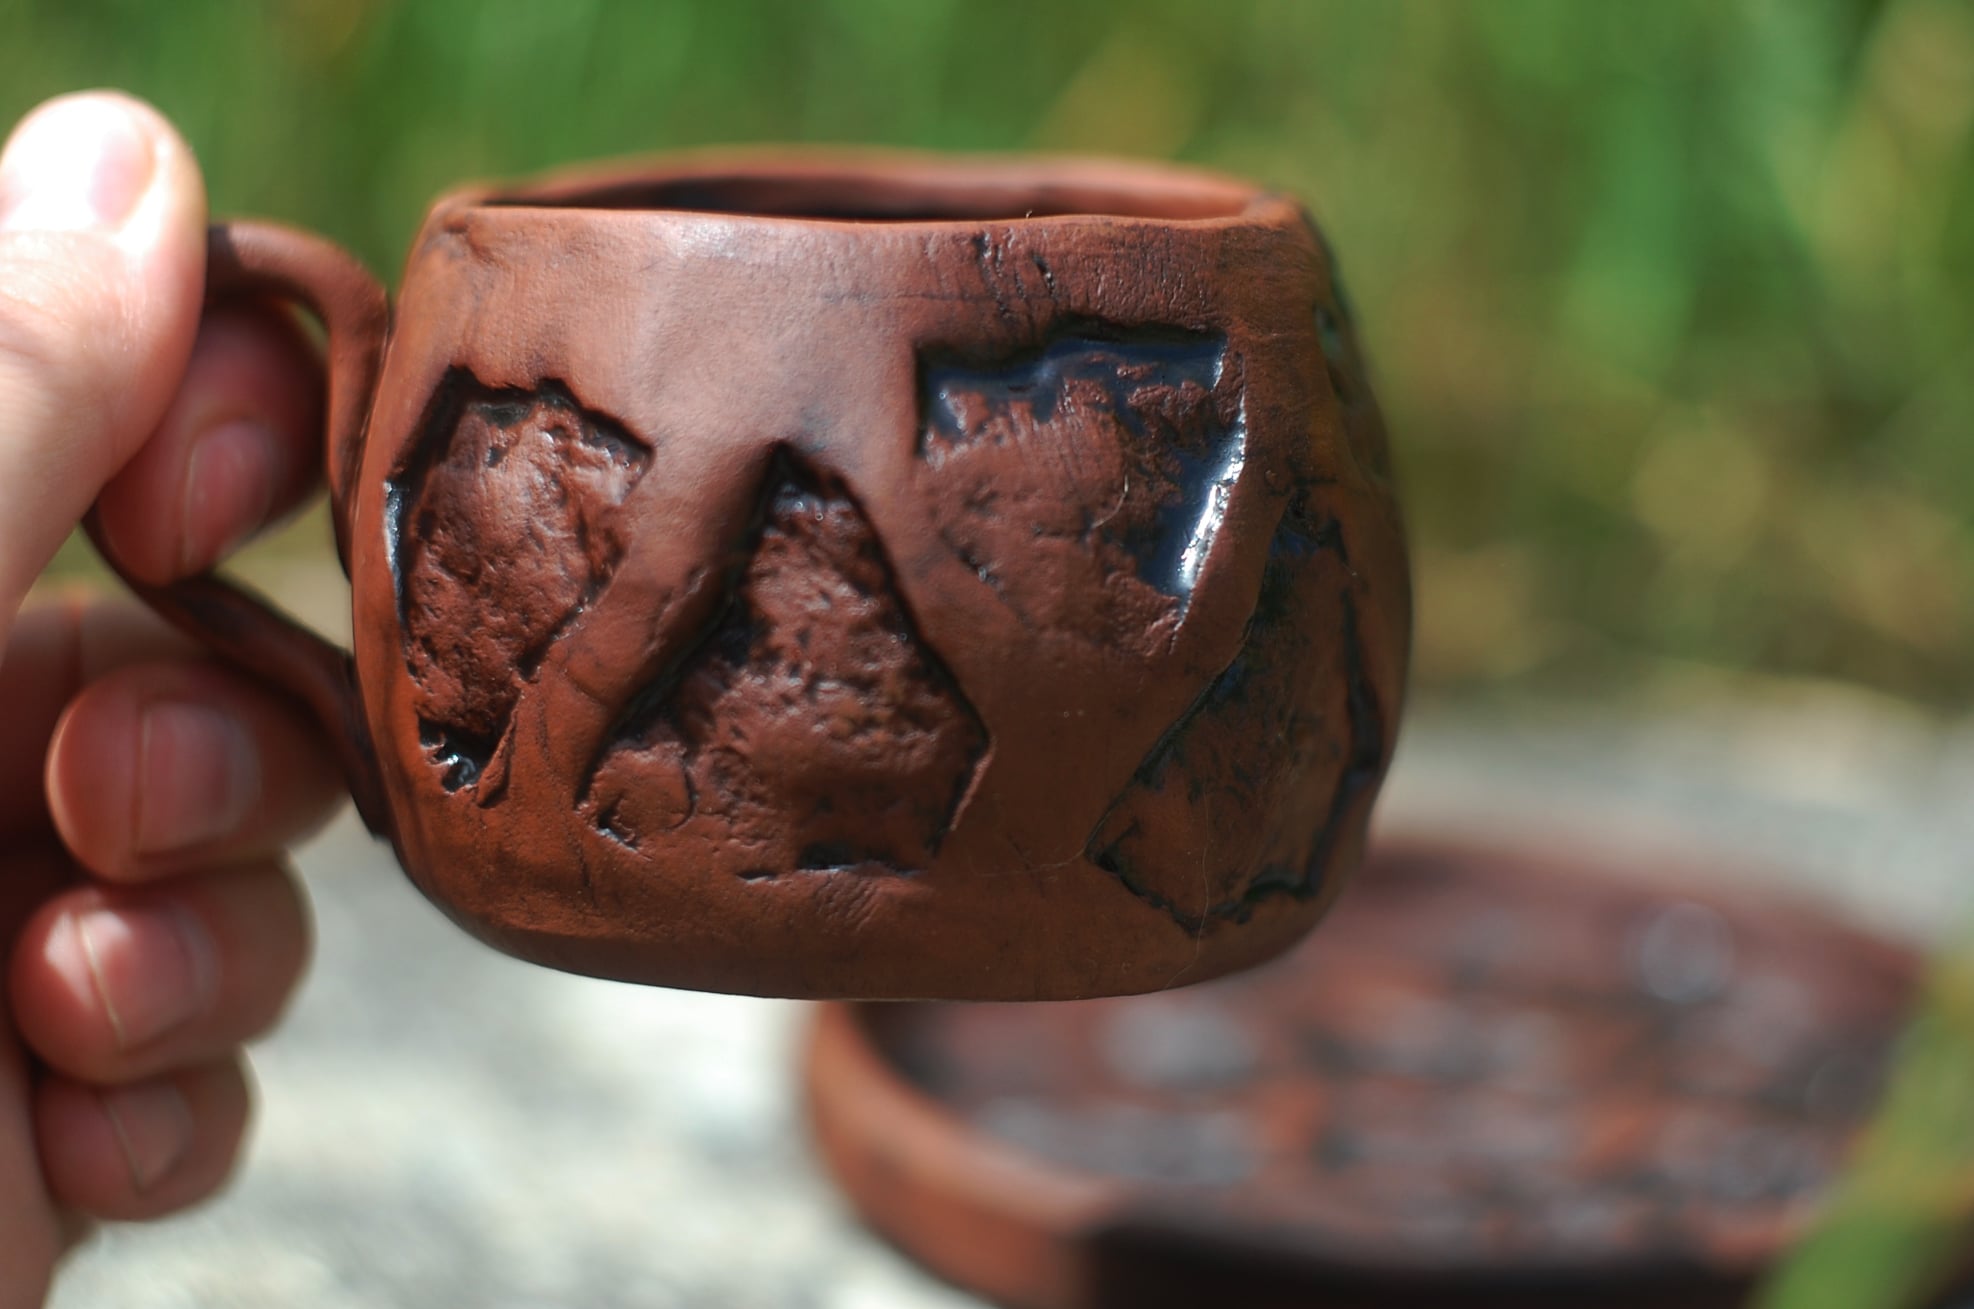 Pottery mug "Stones" w/ handle ~9oz